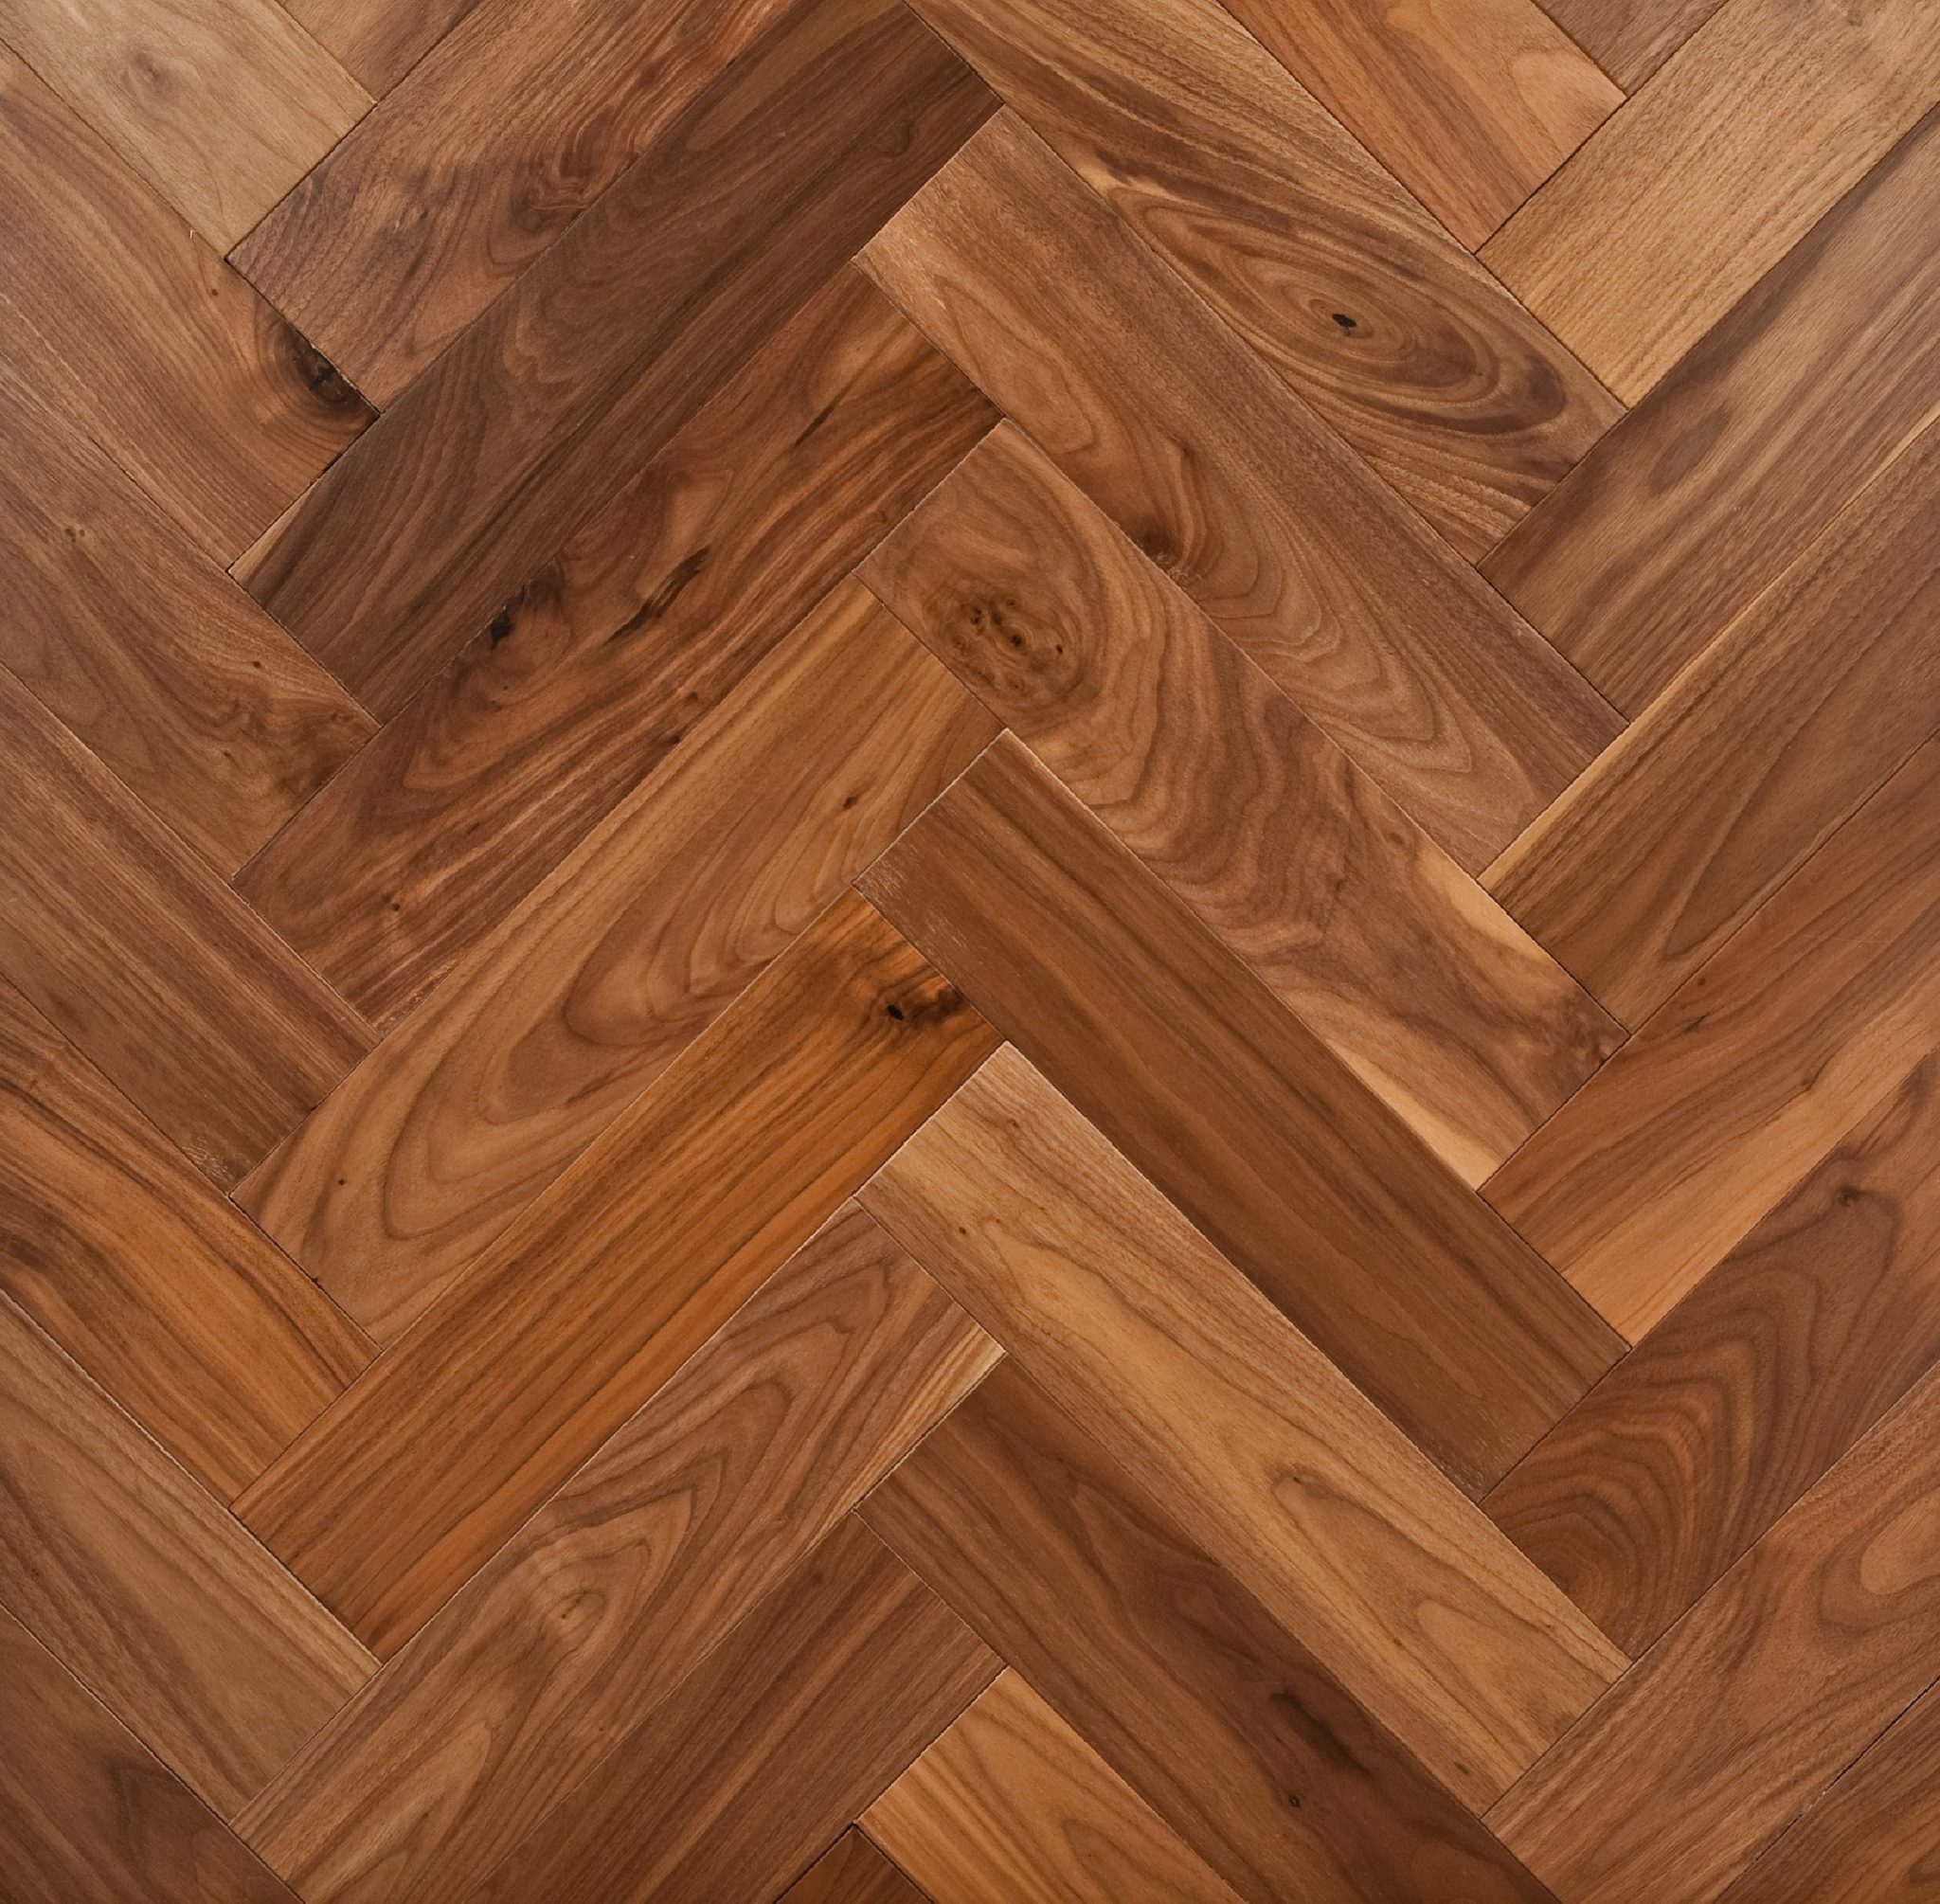 Deco Parquet Black Walnut wood flooring of engineered construction